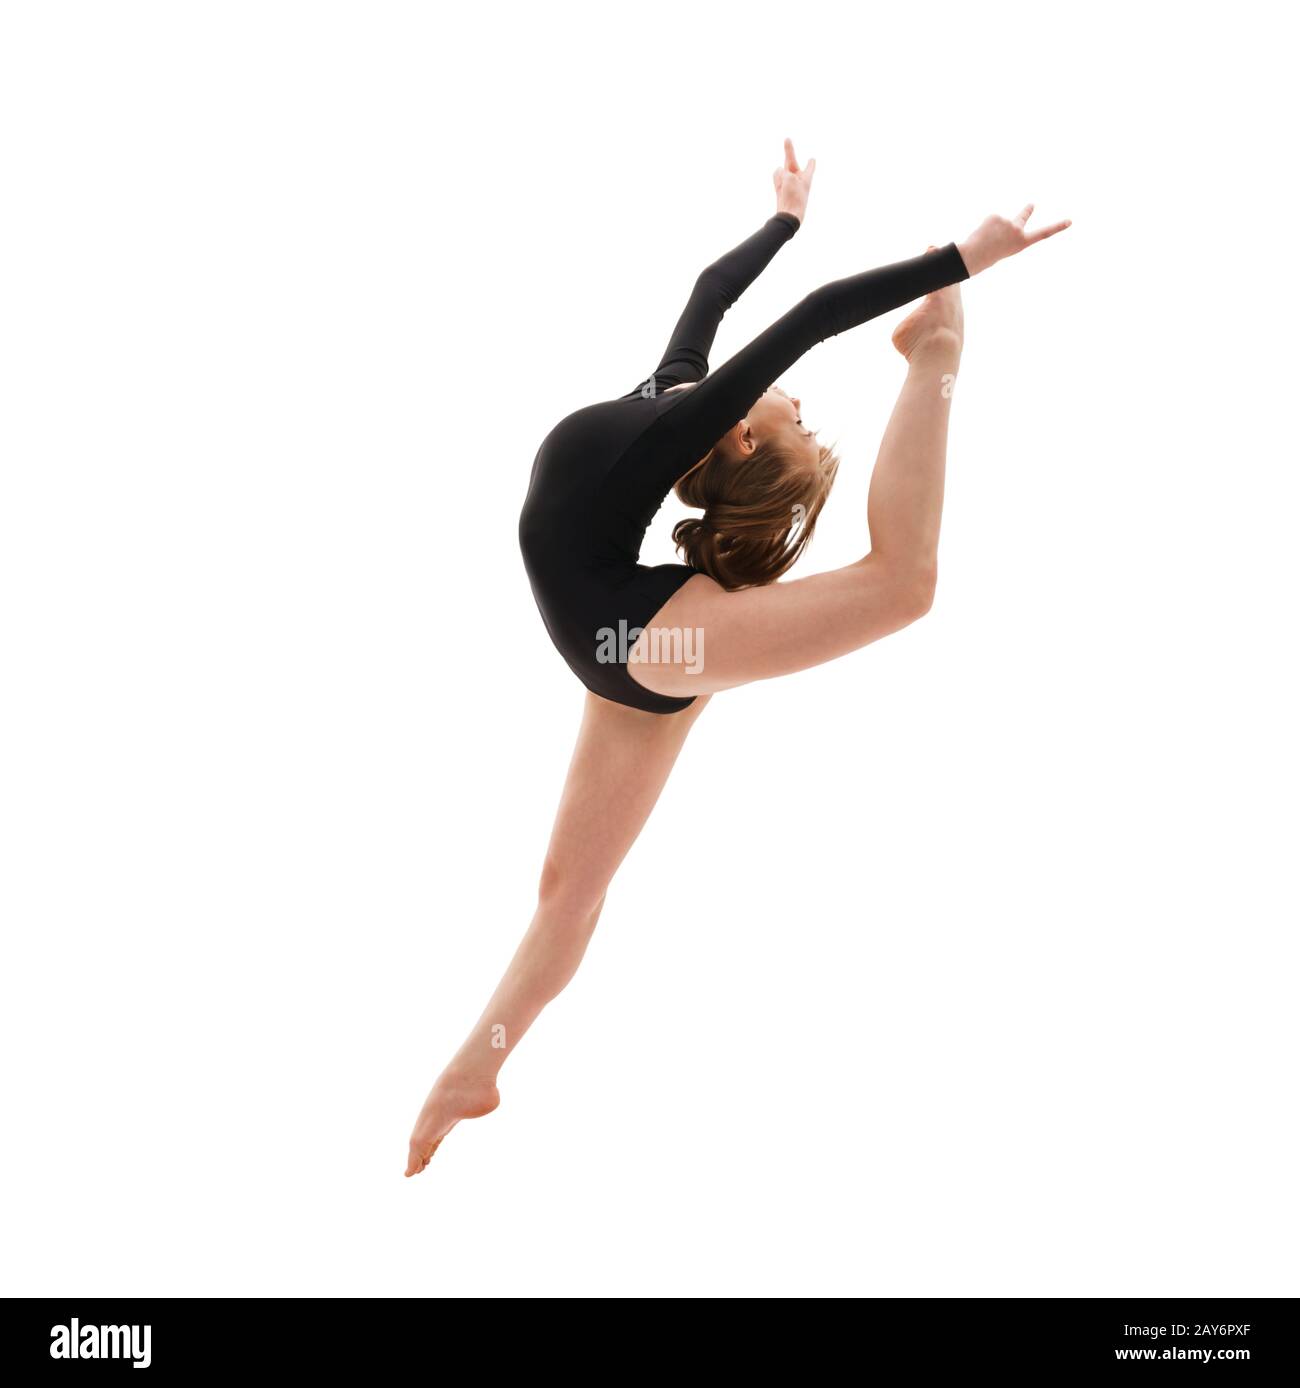 Young gymnast in elegant jump studio shot Stock Photo